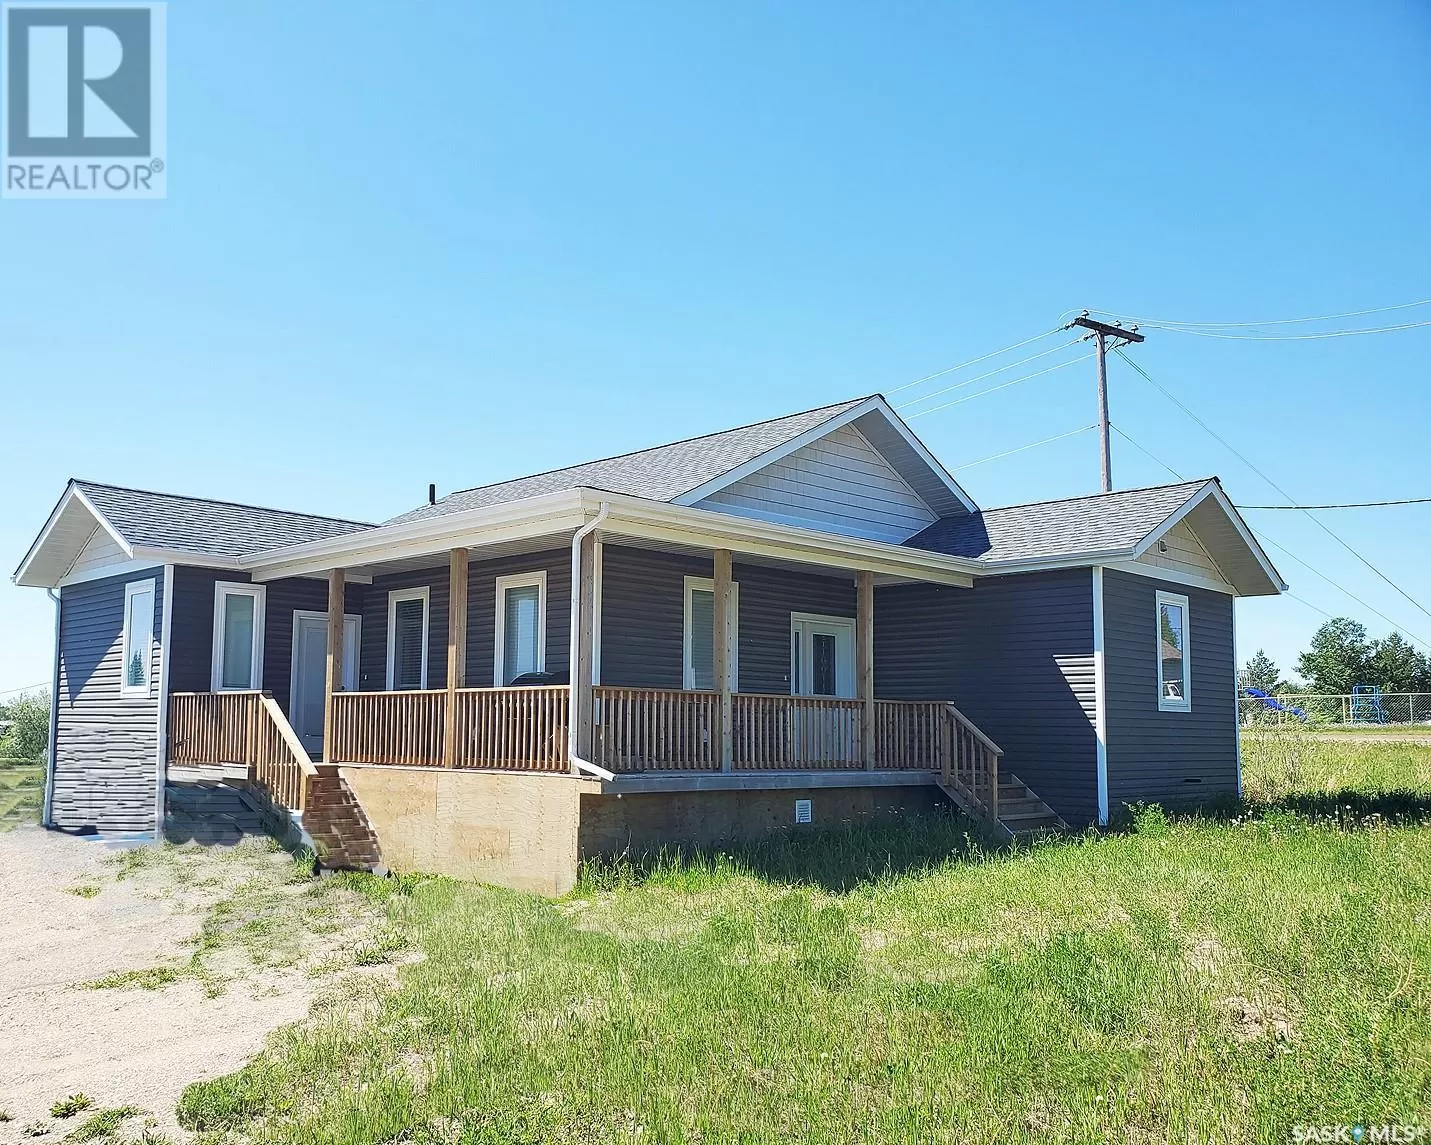 House for rent: 190 1st Street W, Pierceland, Saskatchewan S0M 2K0